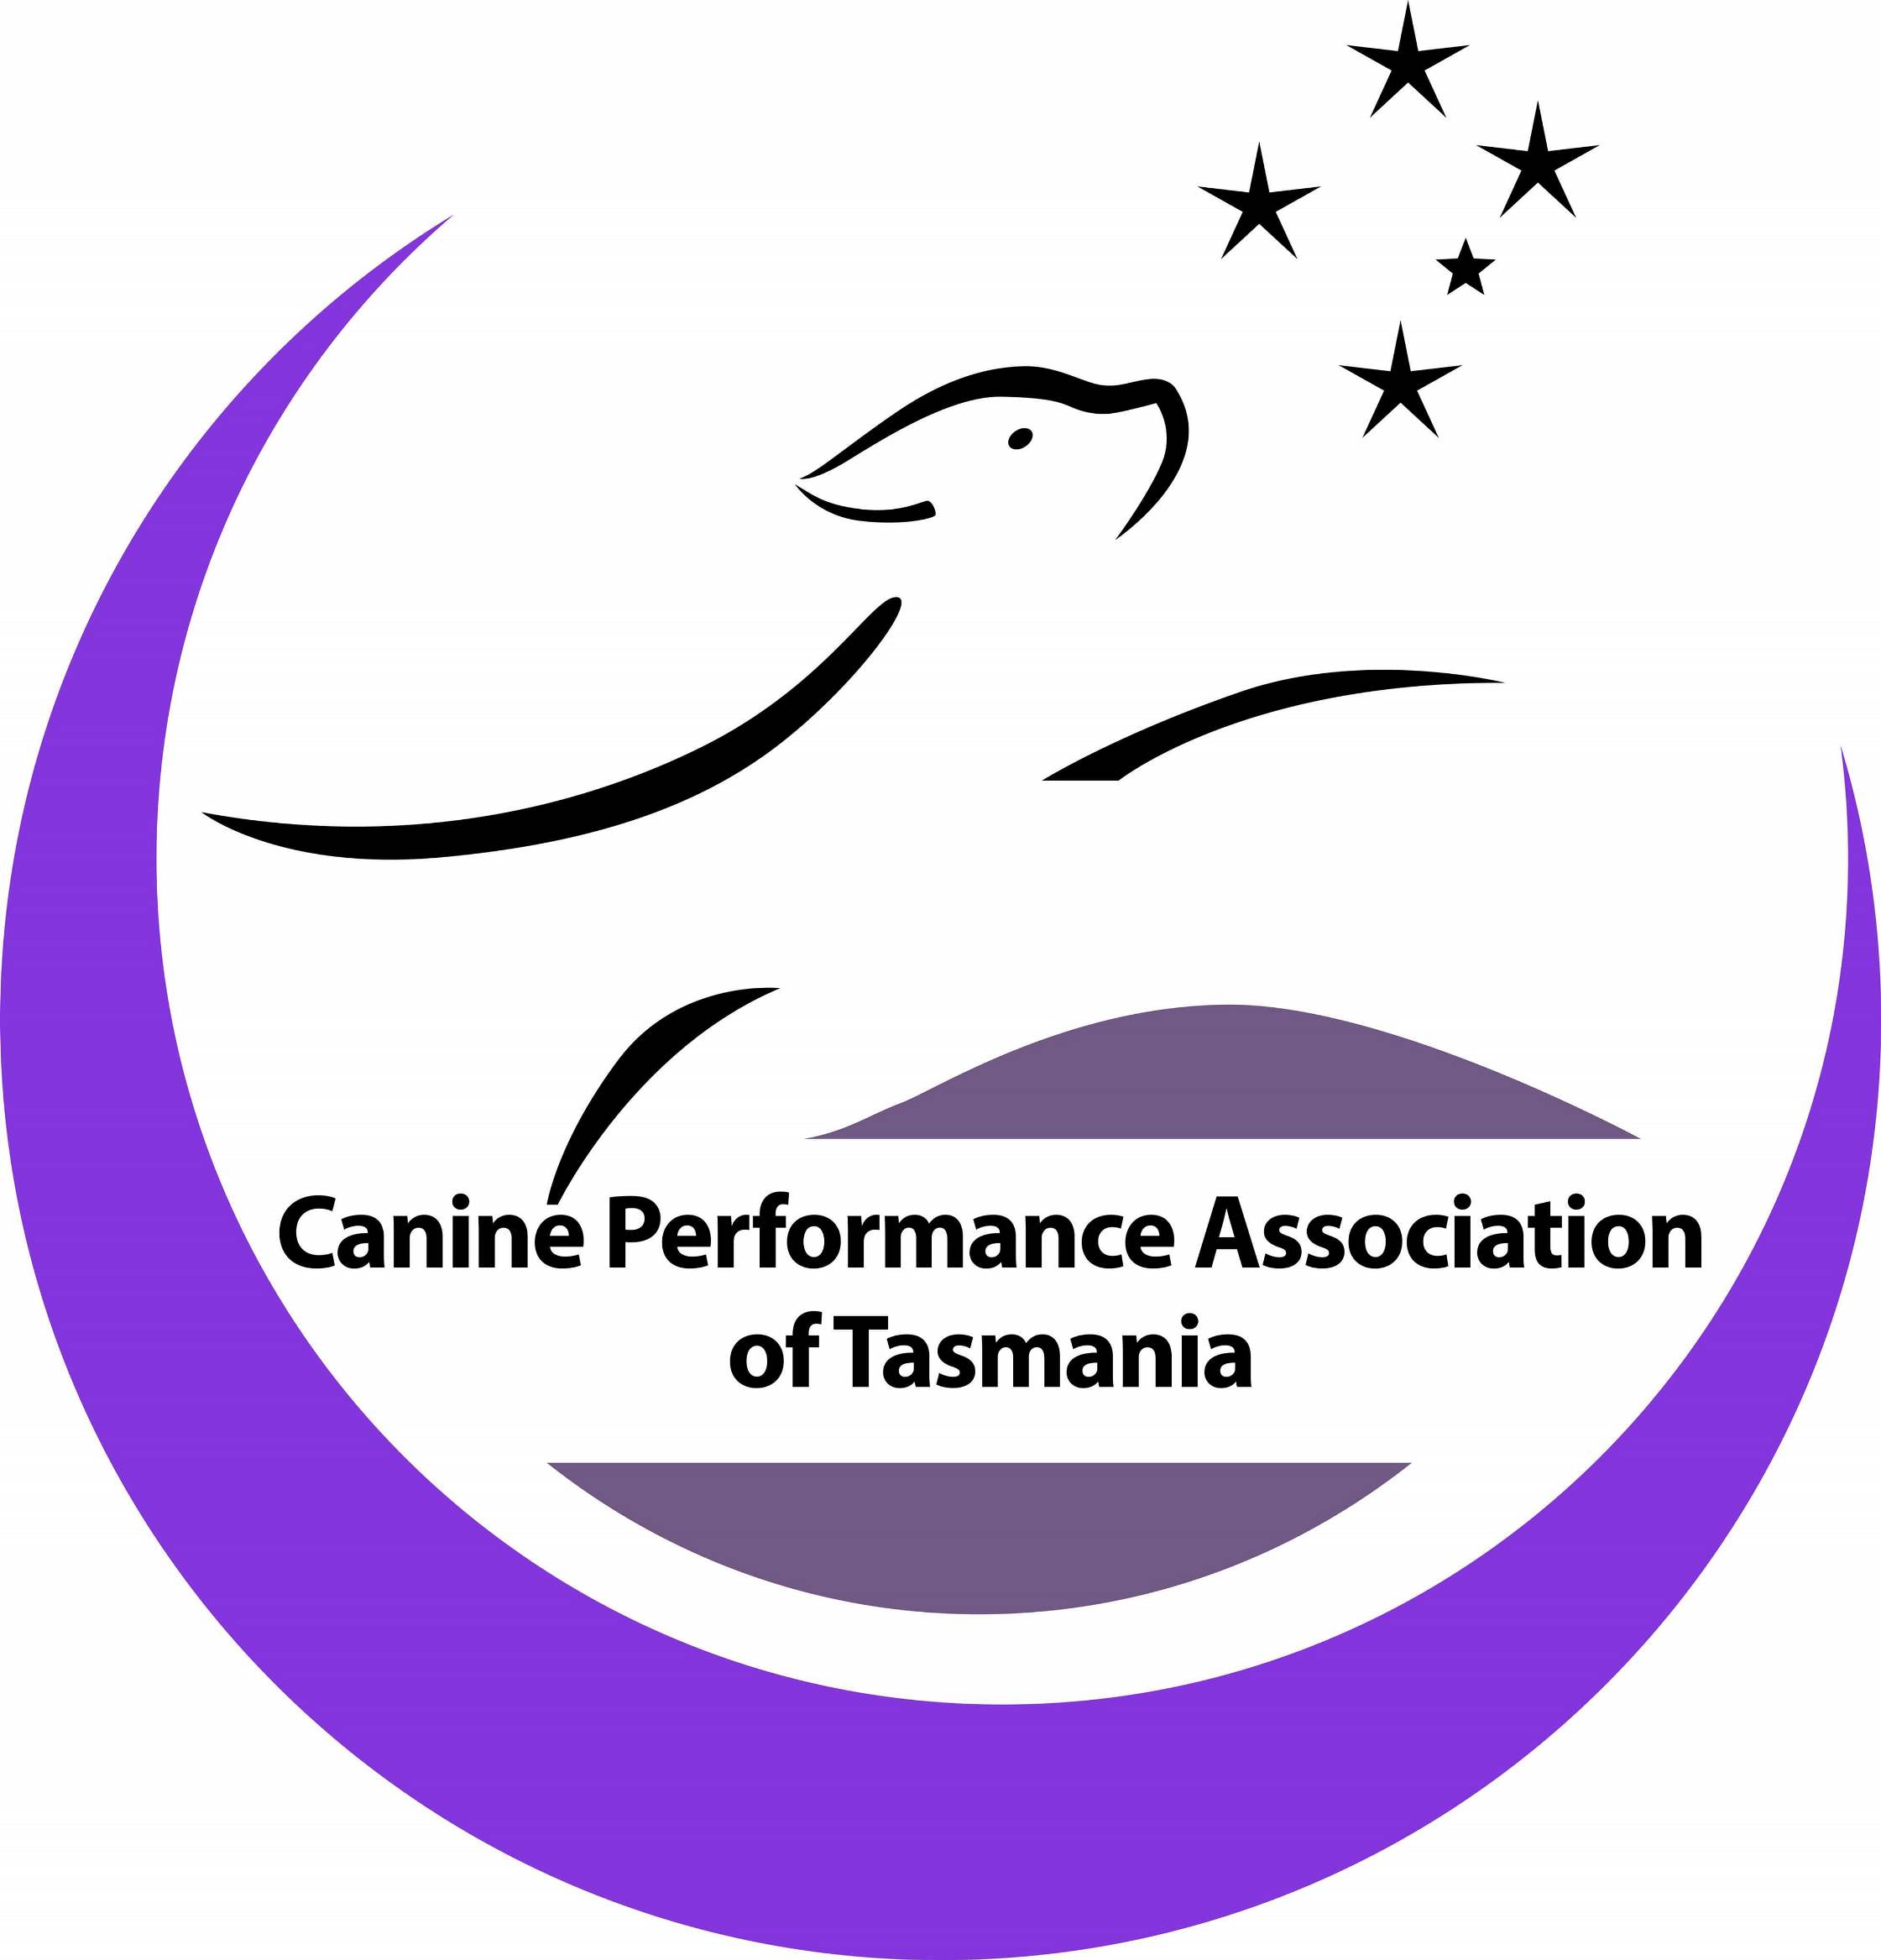 Canine Performance Association of Tasmania logo